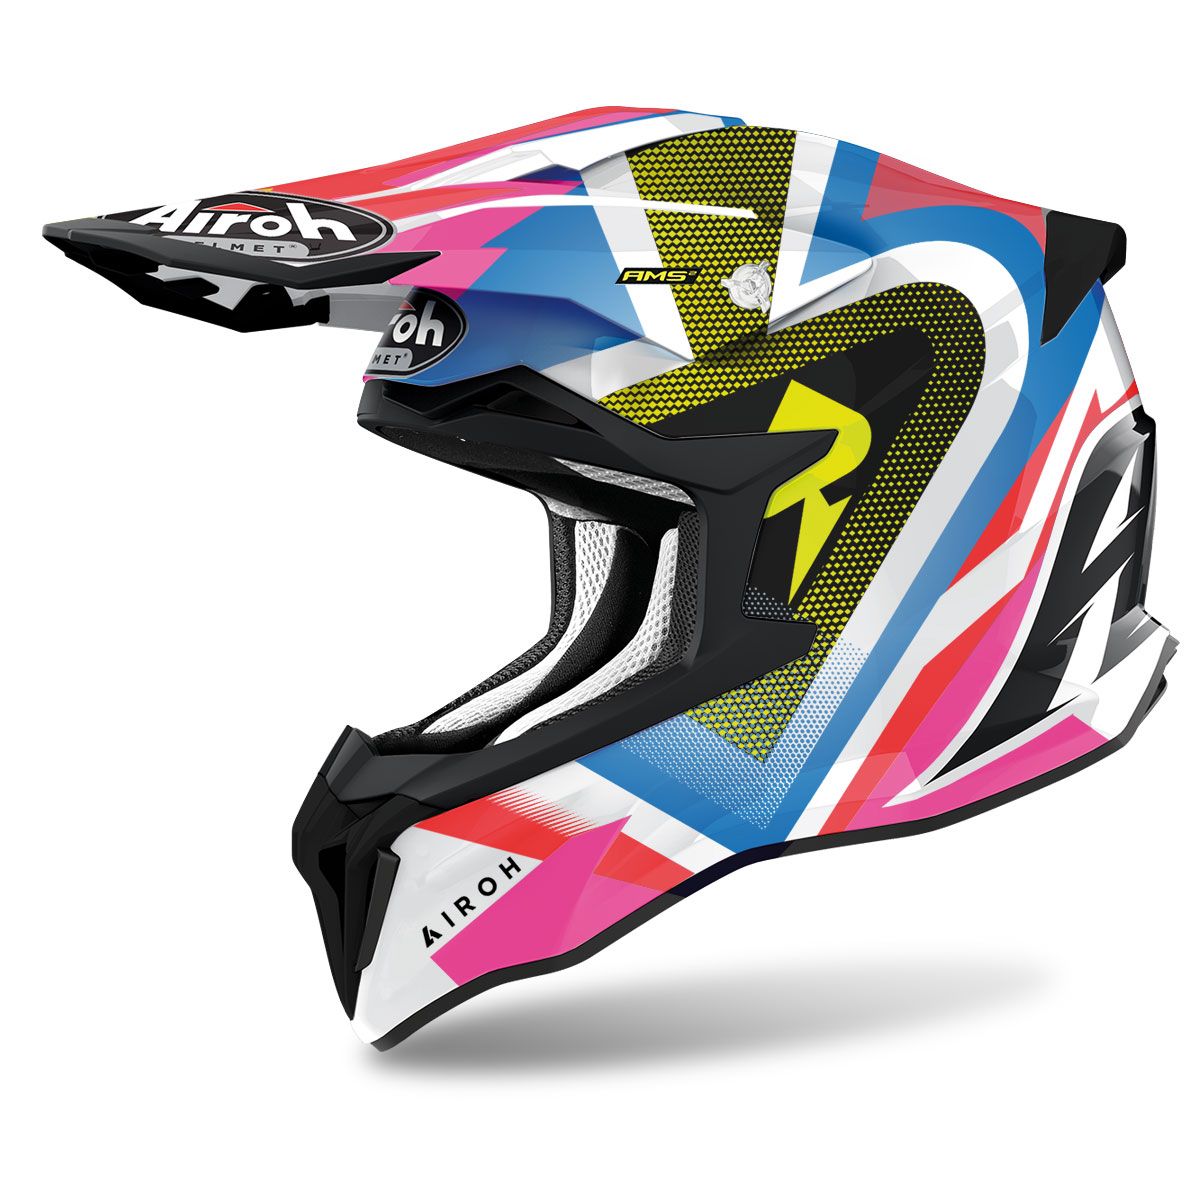 AIROH STKV38 casco motocross strycker view lucido